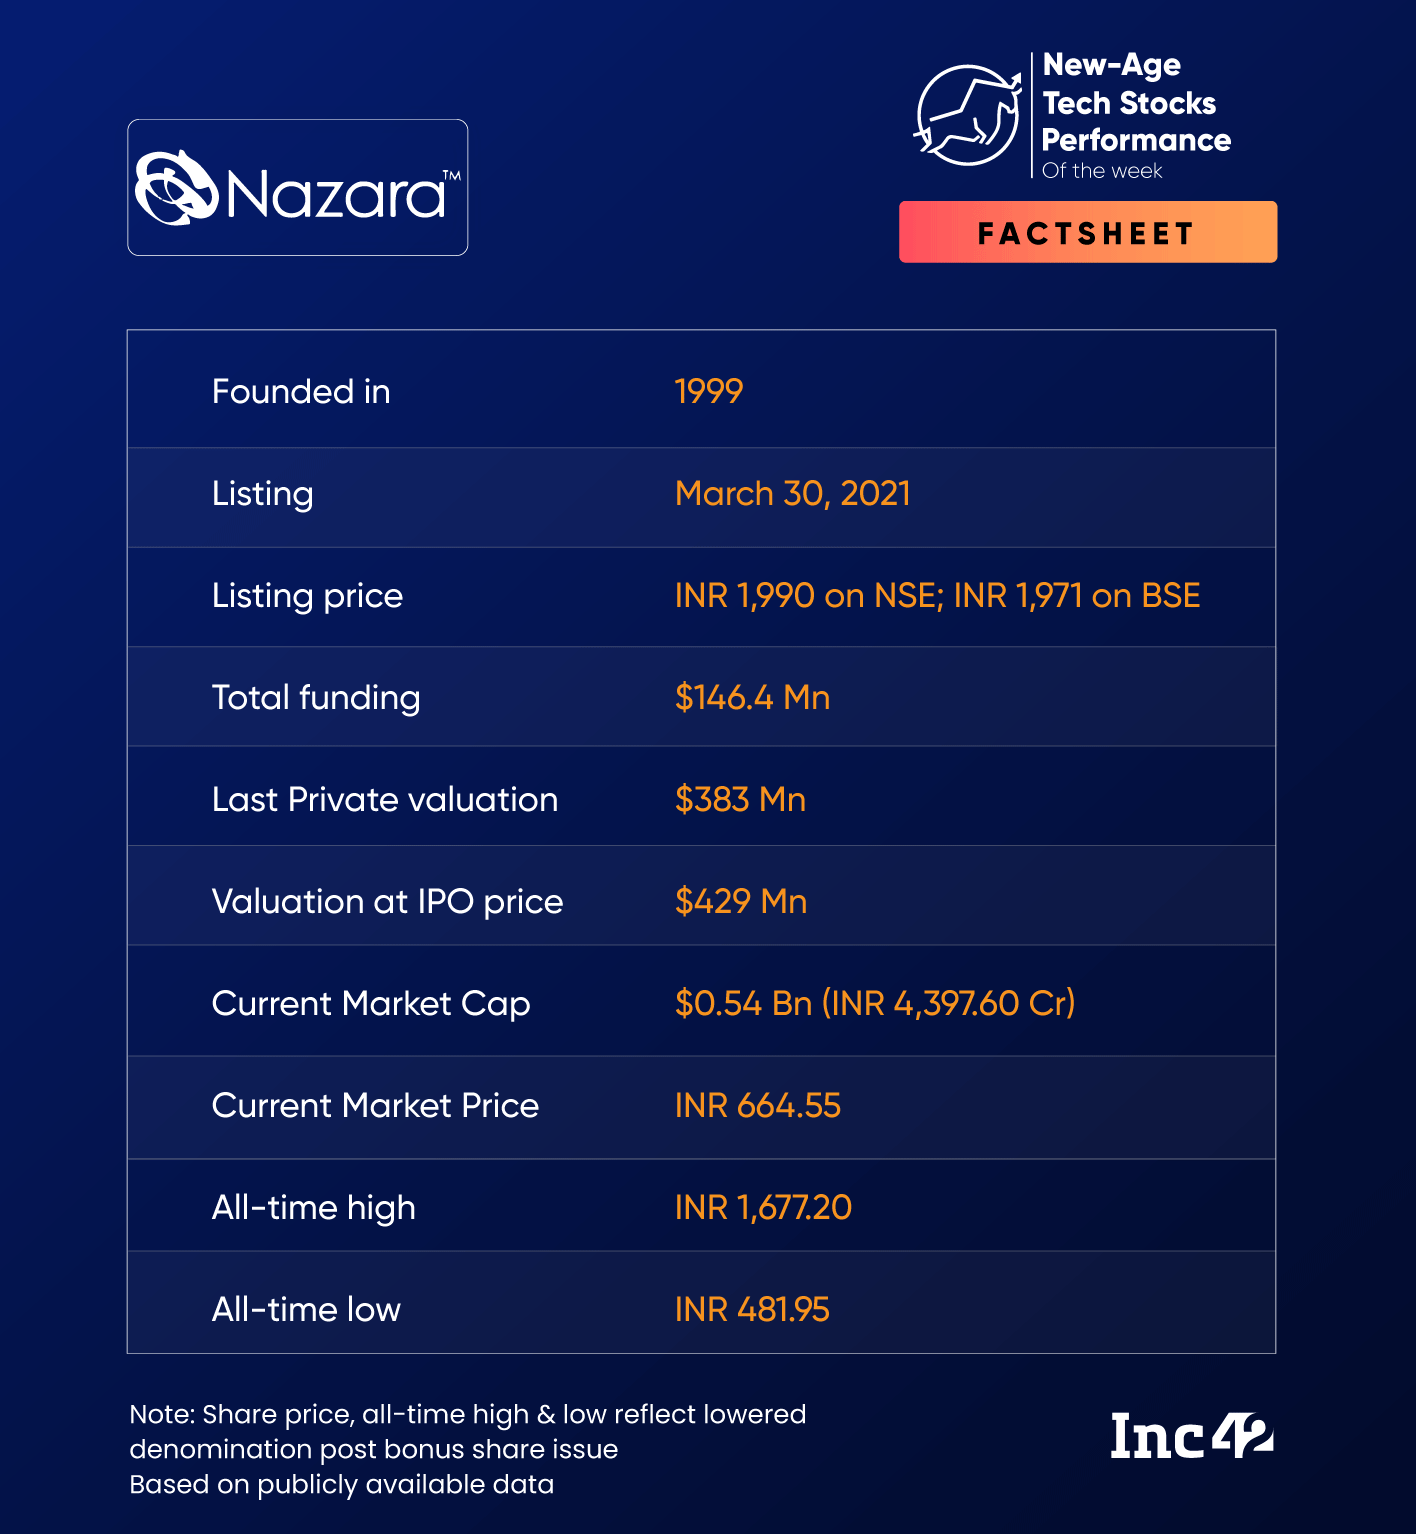 Nazara Reports Net Profit of INR 20.9 Cr In Q1